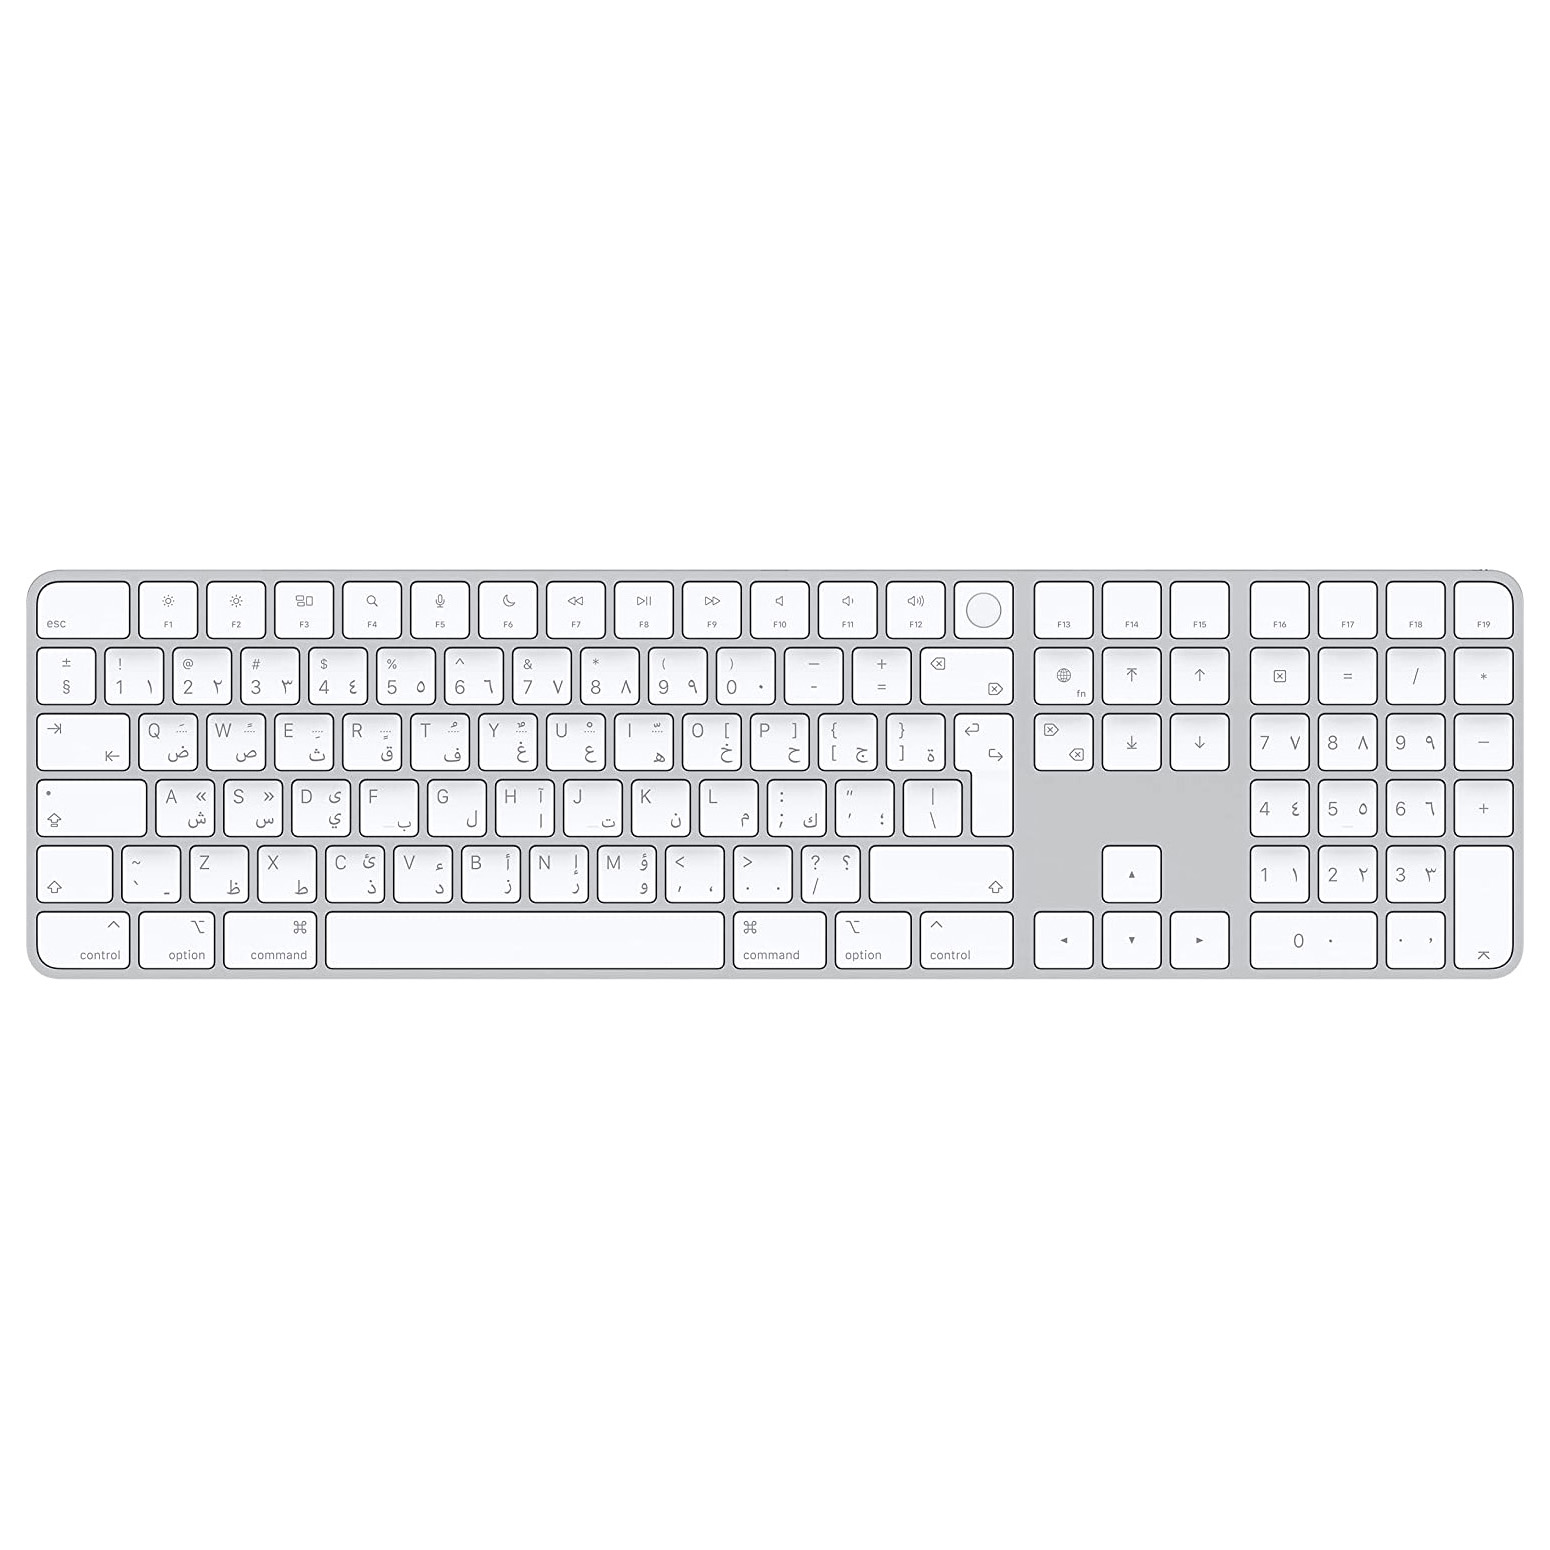 Клавиатура беспроводная Apple Magic Keyboard с Touch ID и цифровой панелью, Arabic, белые клавиши клавиатура keyboard cnba5903619 для ноутбука samsung np370r4e 470r4e np470r4e np470r4e k01 450r4e np450r4e черная с подсветкой